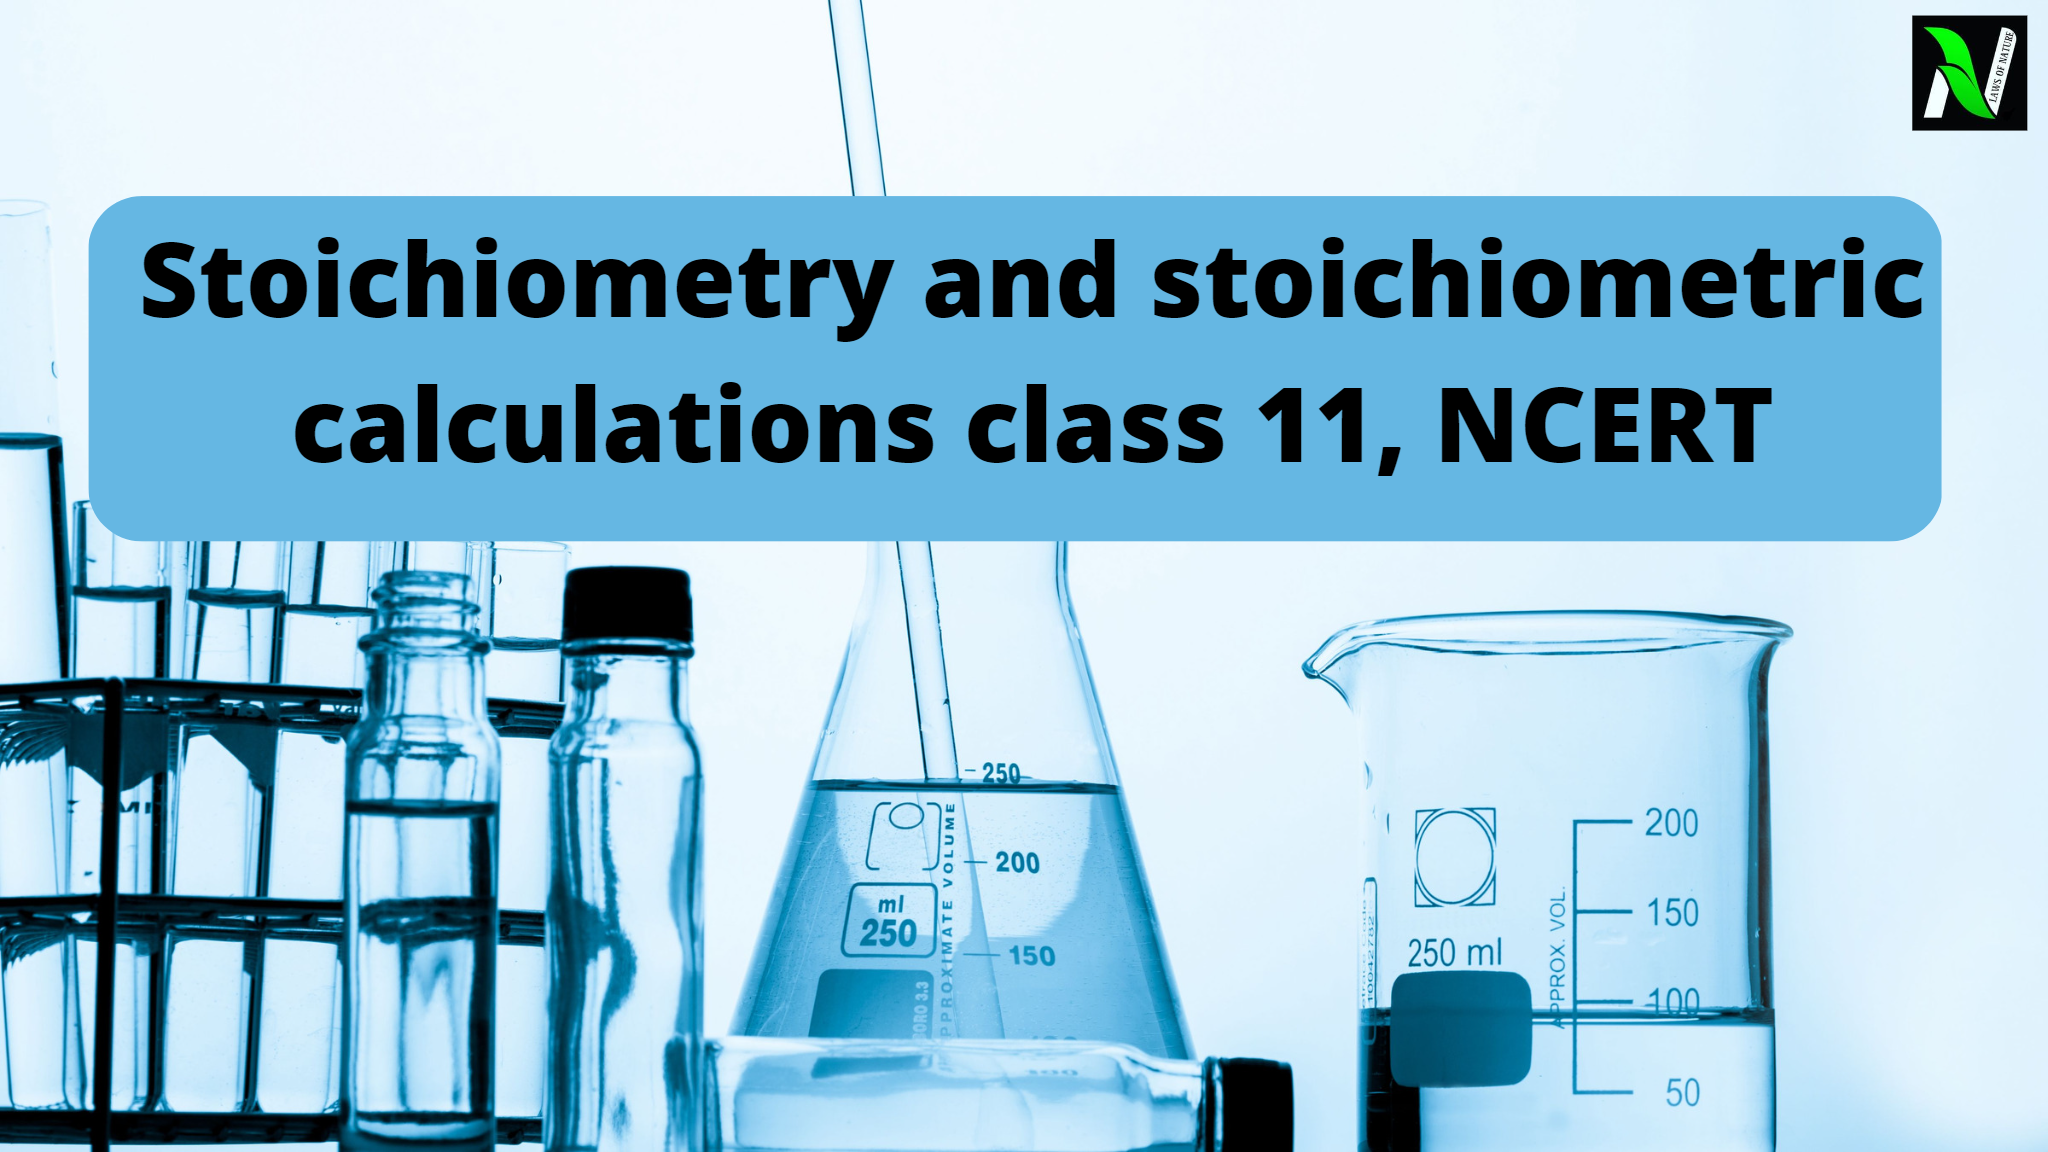 Stoichiometry and stoichiometric calculations class 11, NCERT